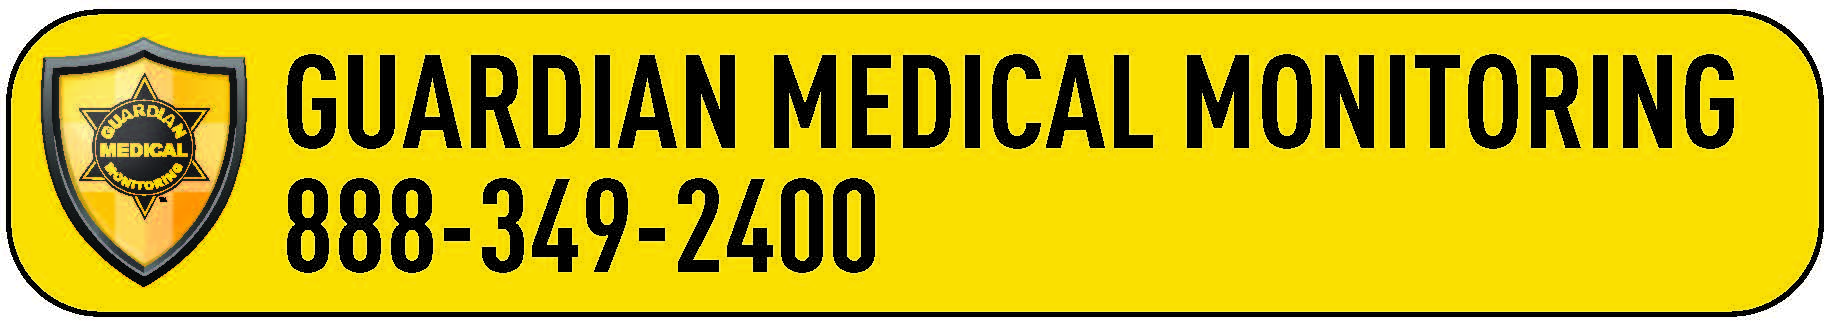 Guardian Medical logo